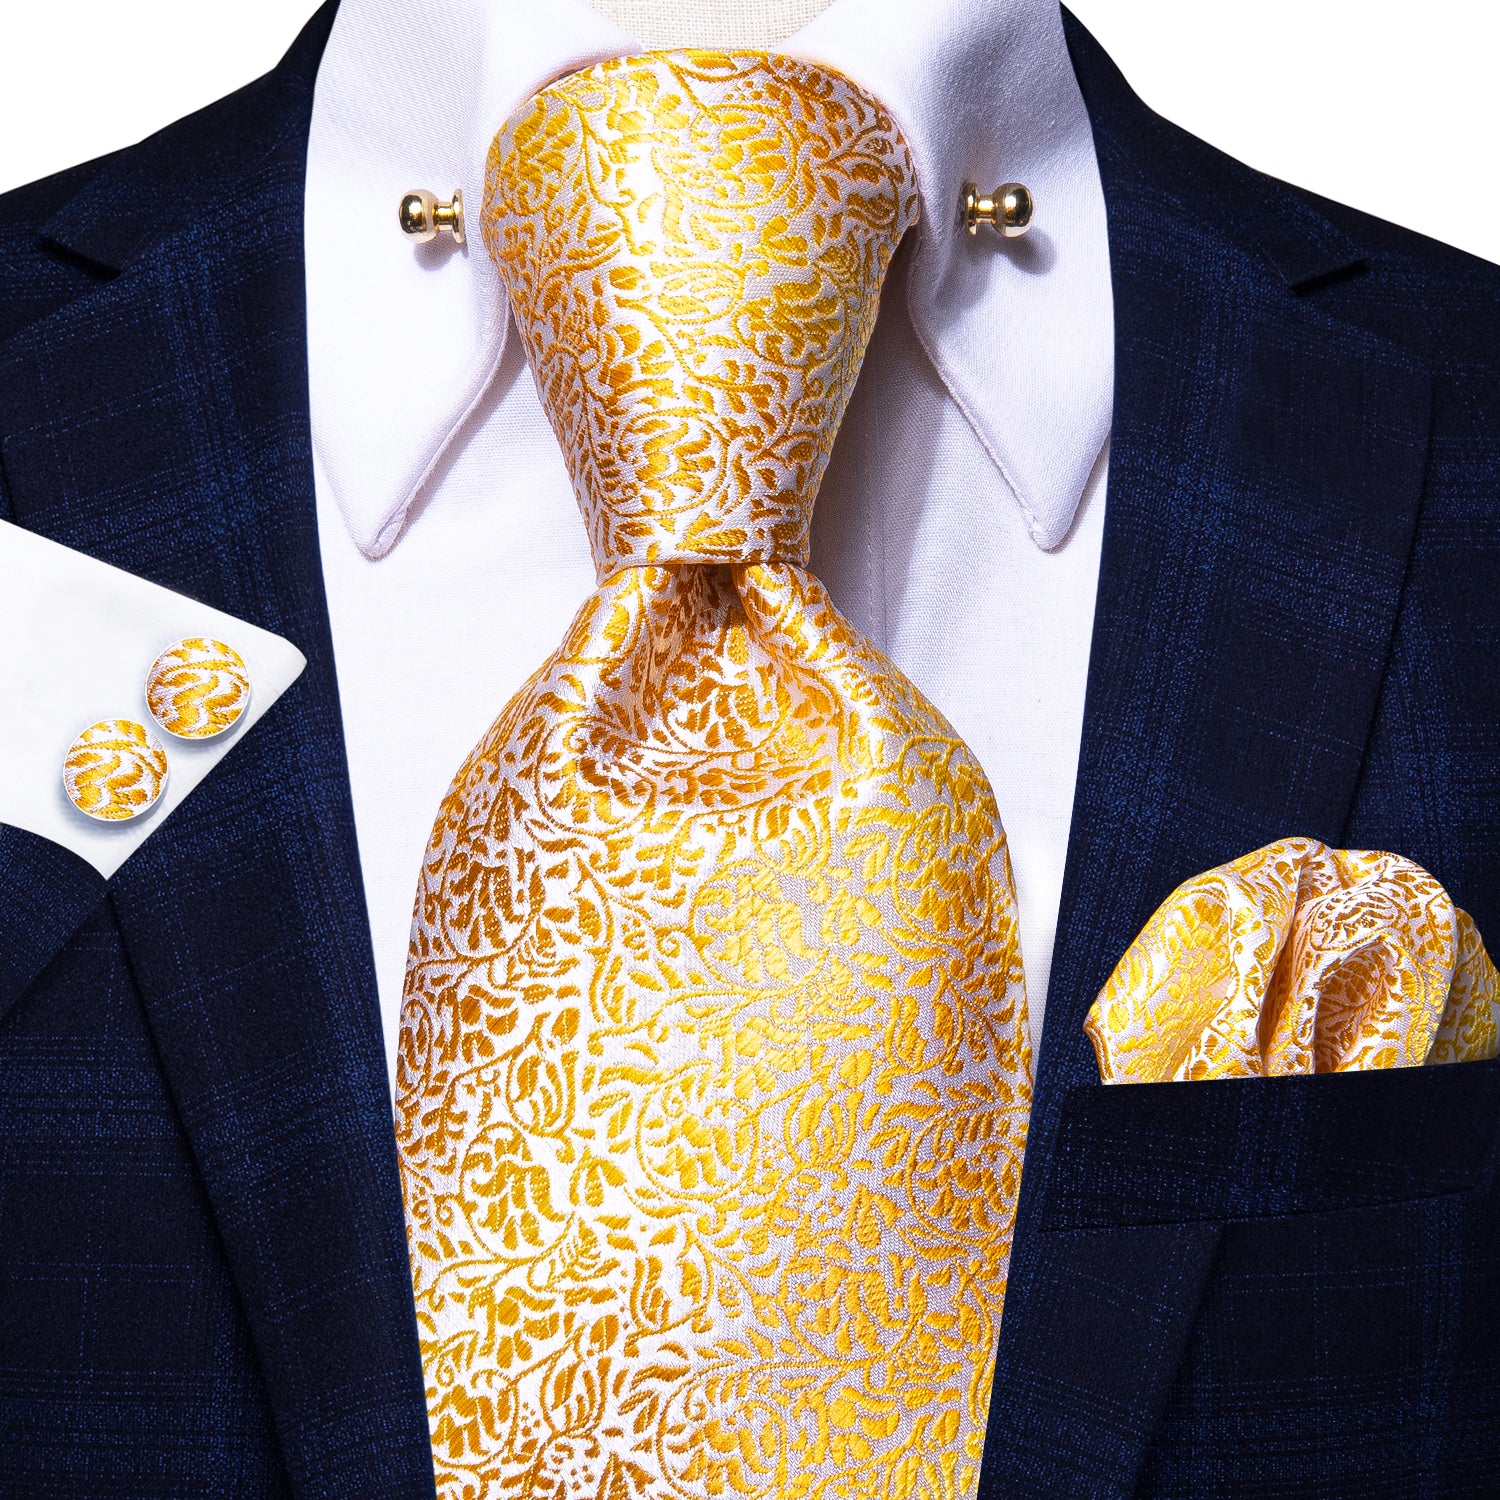 Gold Leaves Silk Tie Handkerchief Cufflinks Set with Collar Pin